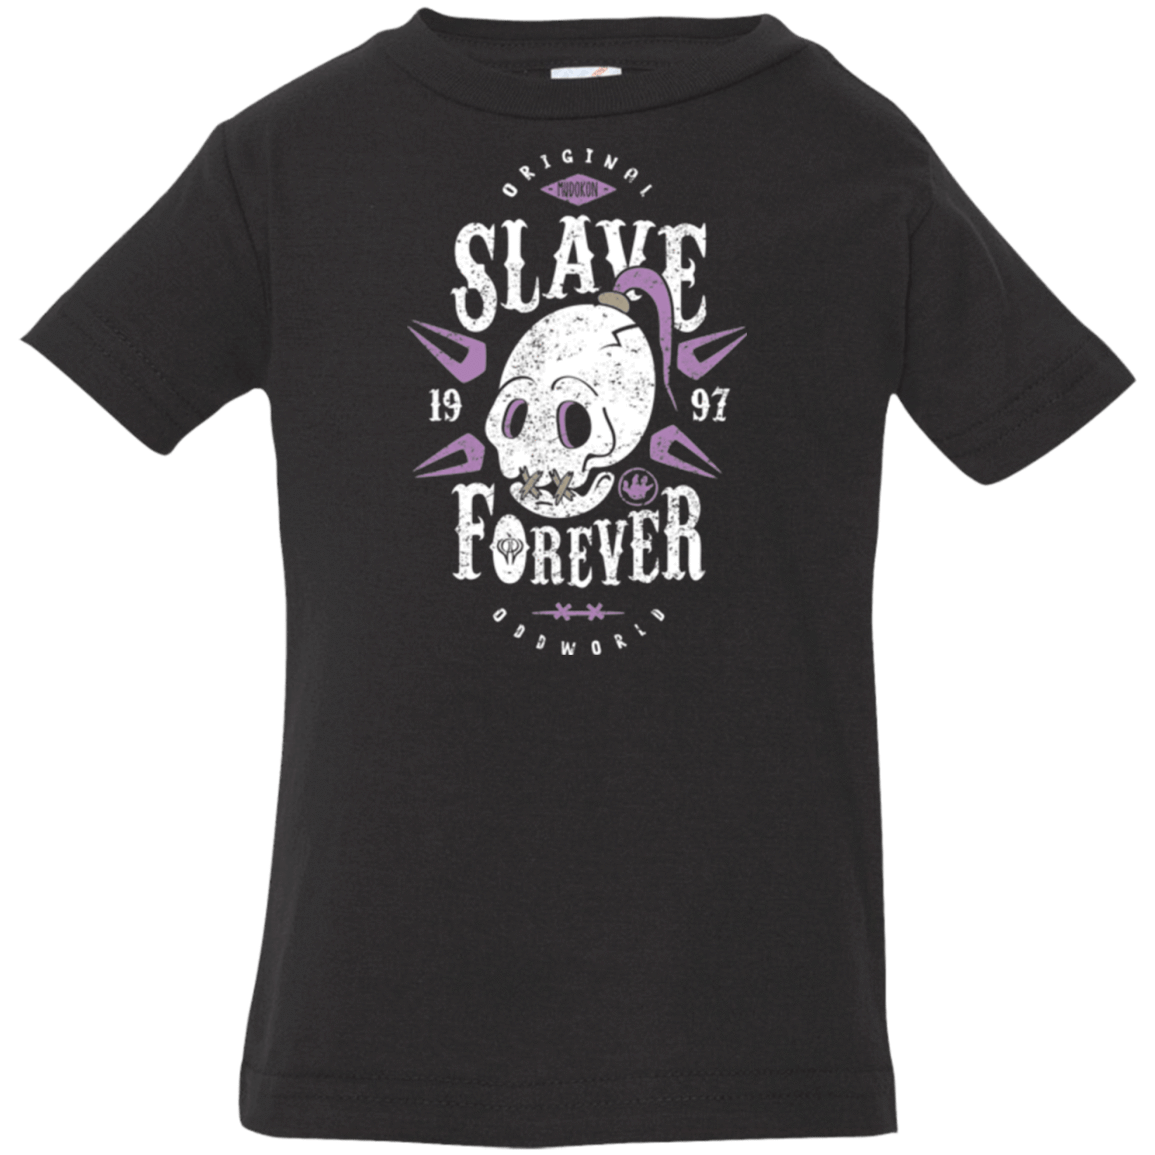 T-Shirts Black / 6 Months Slave Forever Infant Premium T-Shirt